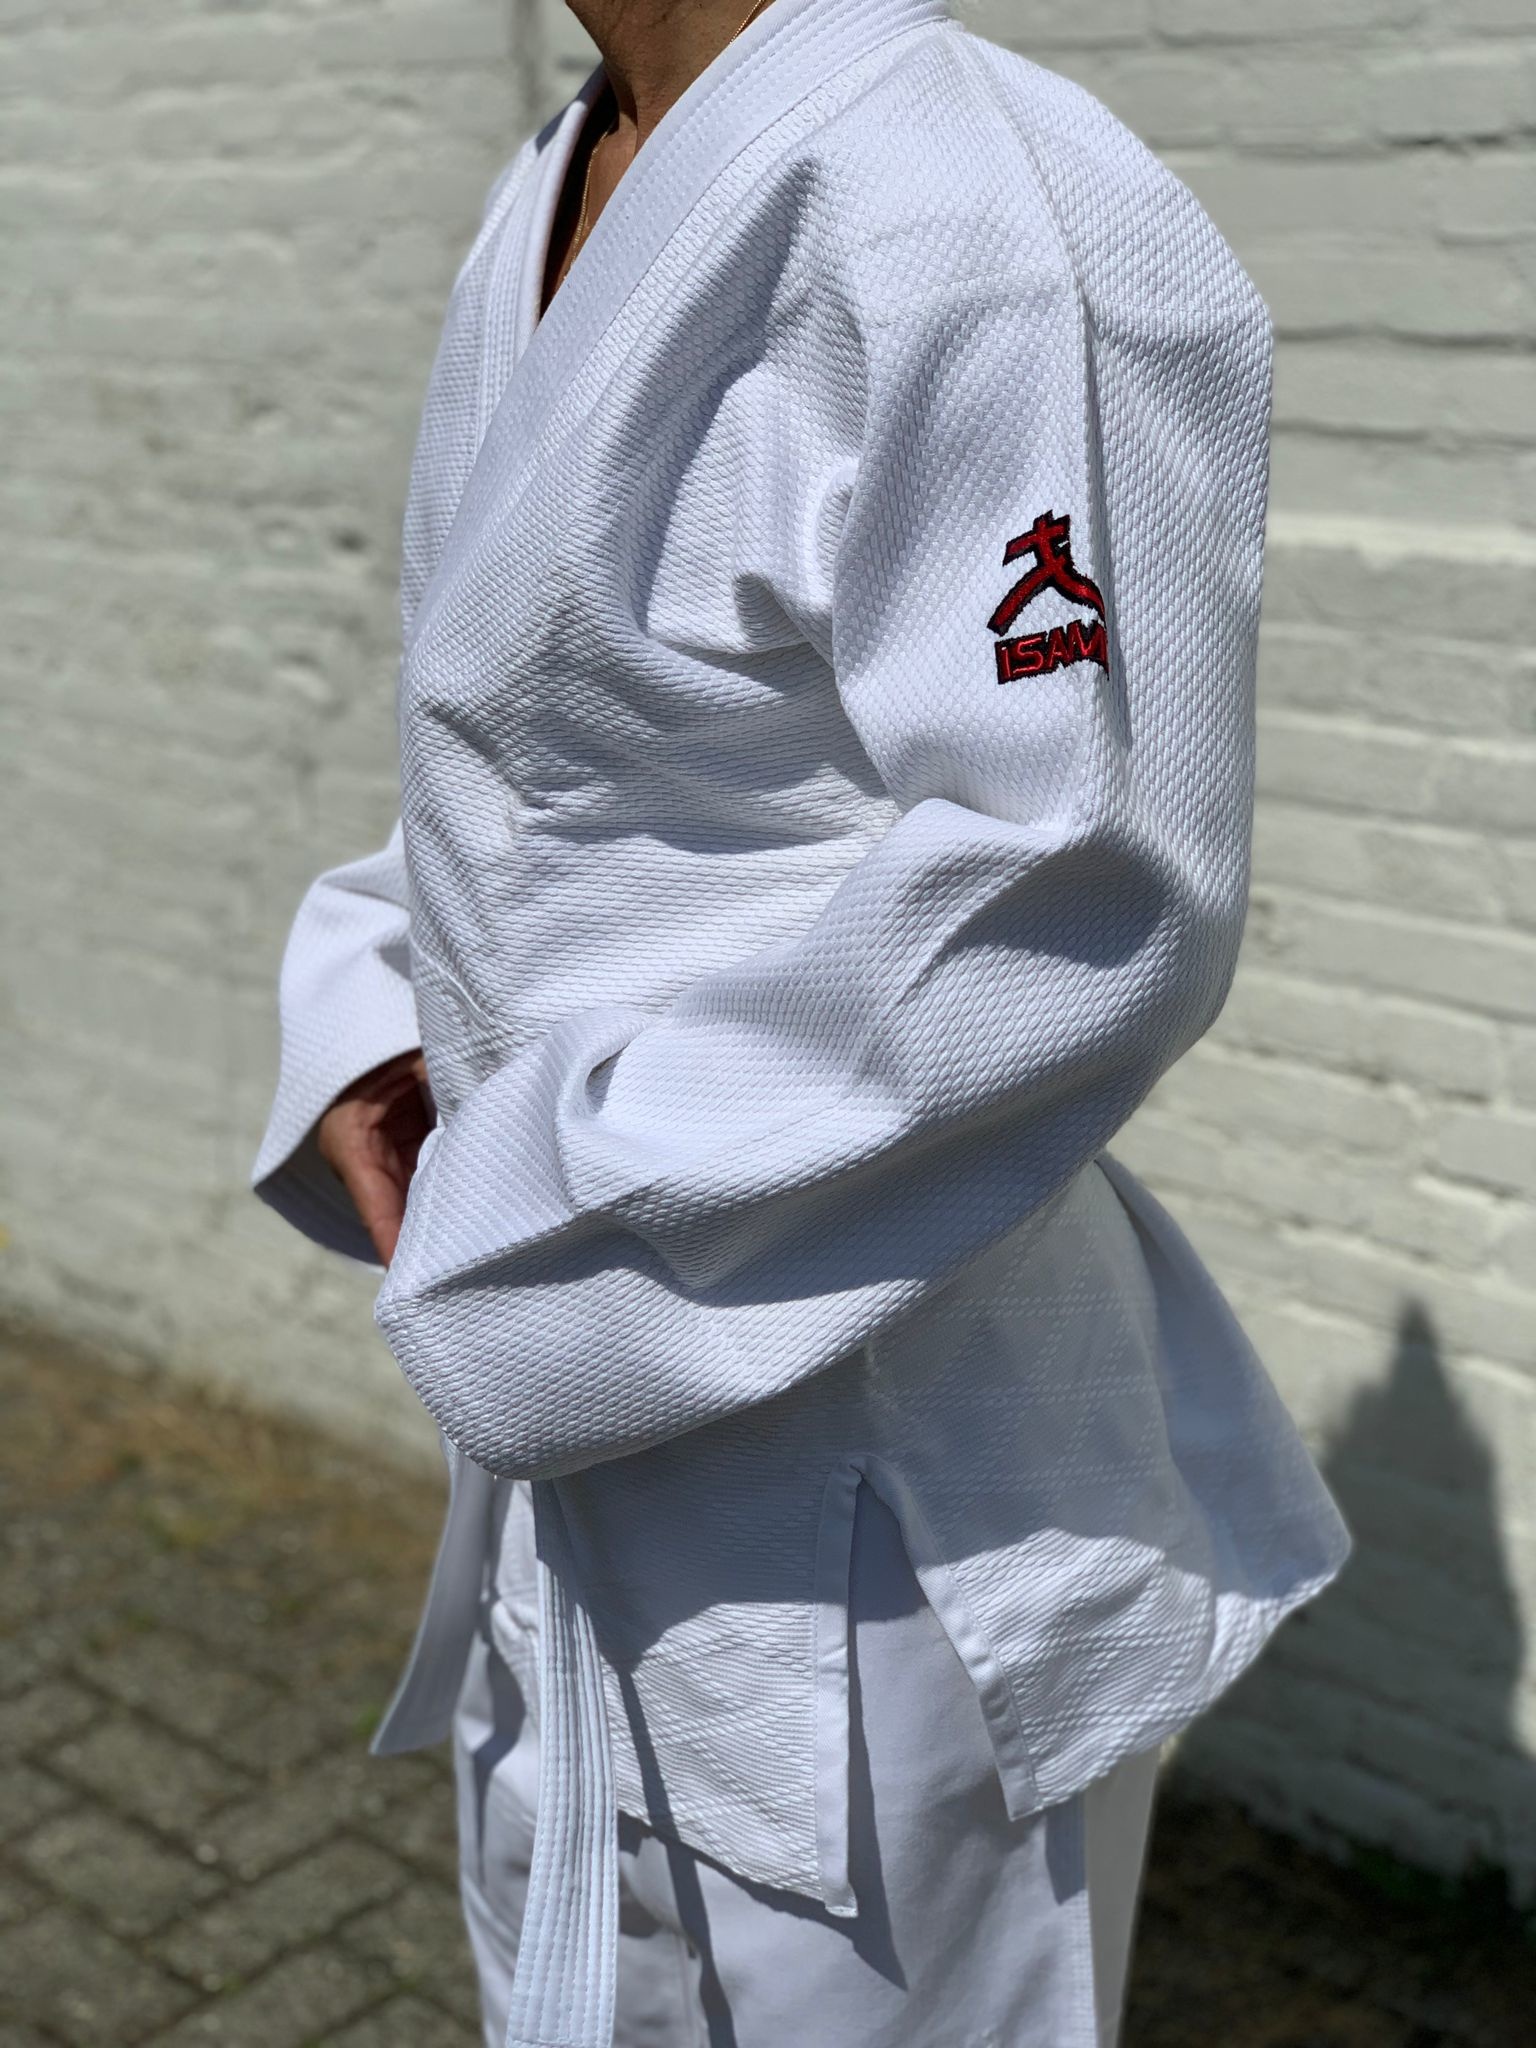 Kimano/judo kimono –